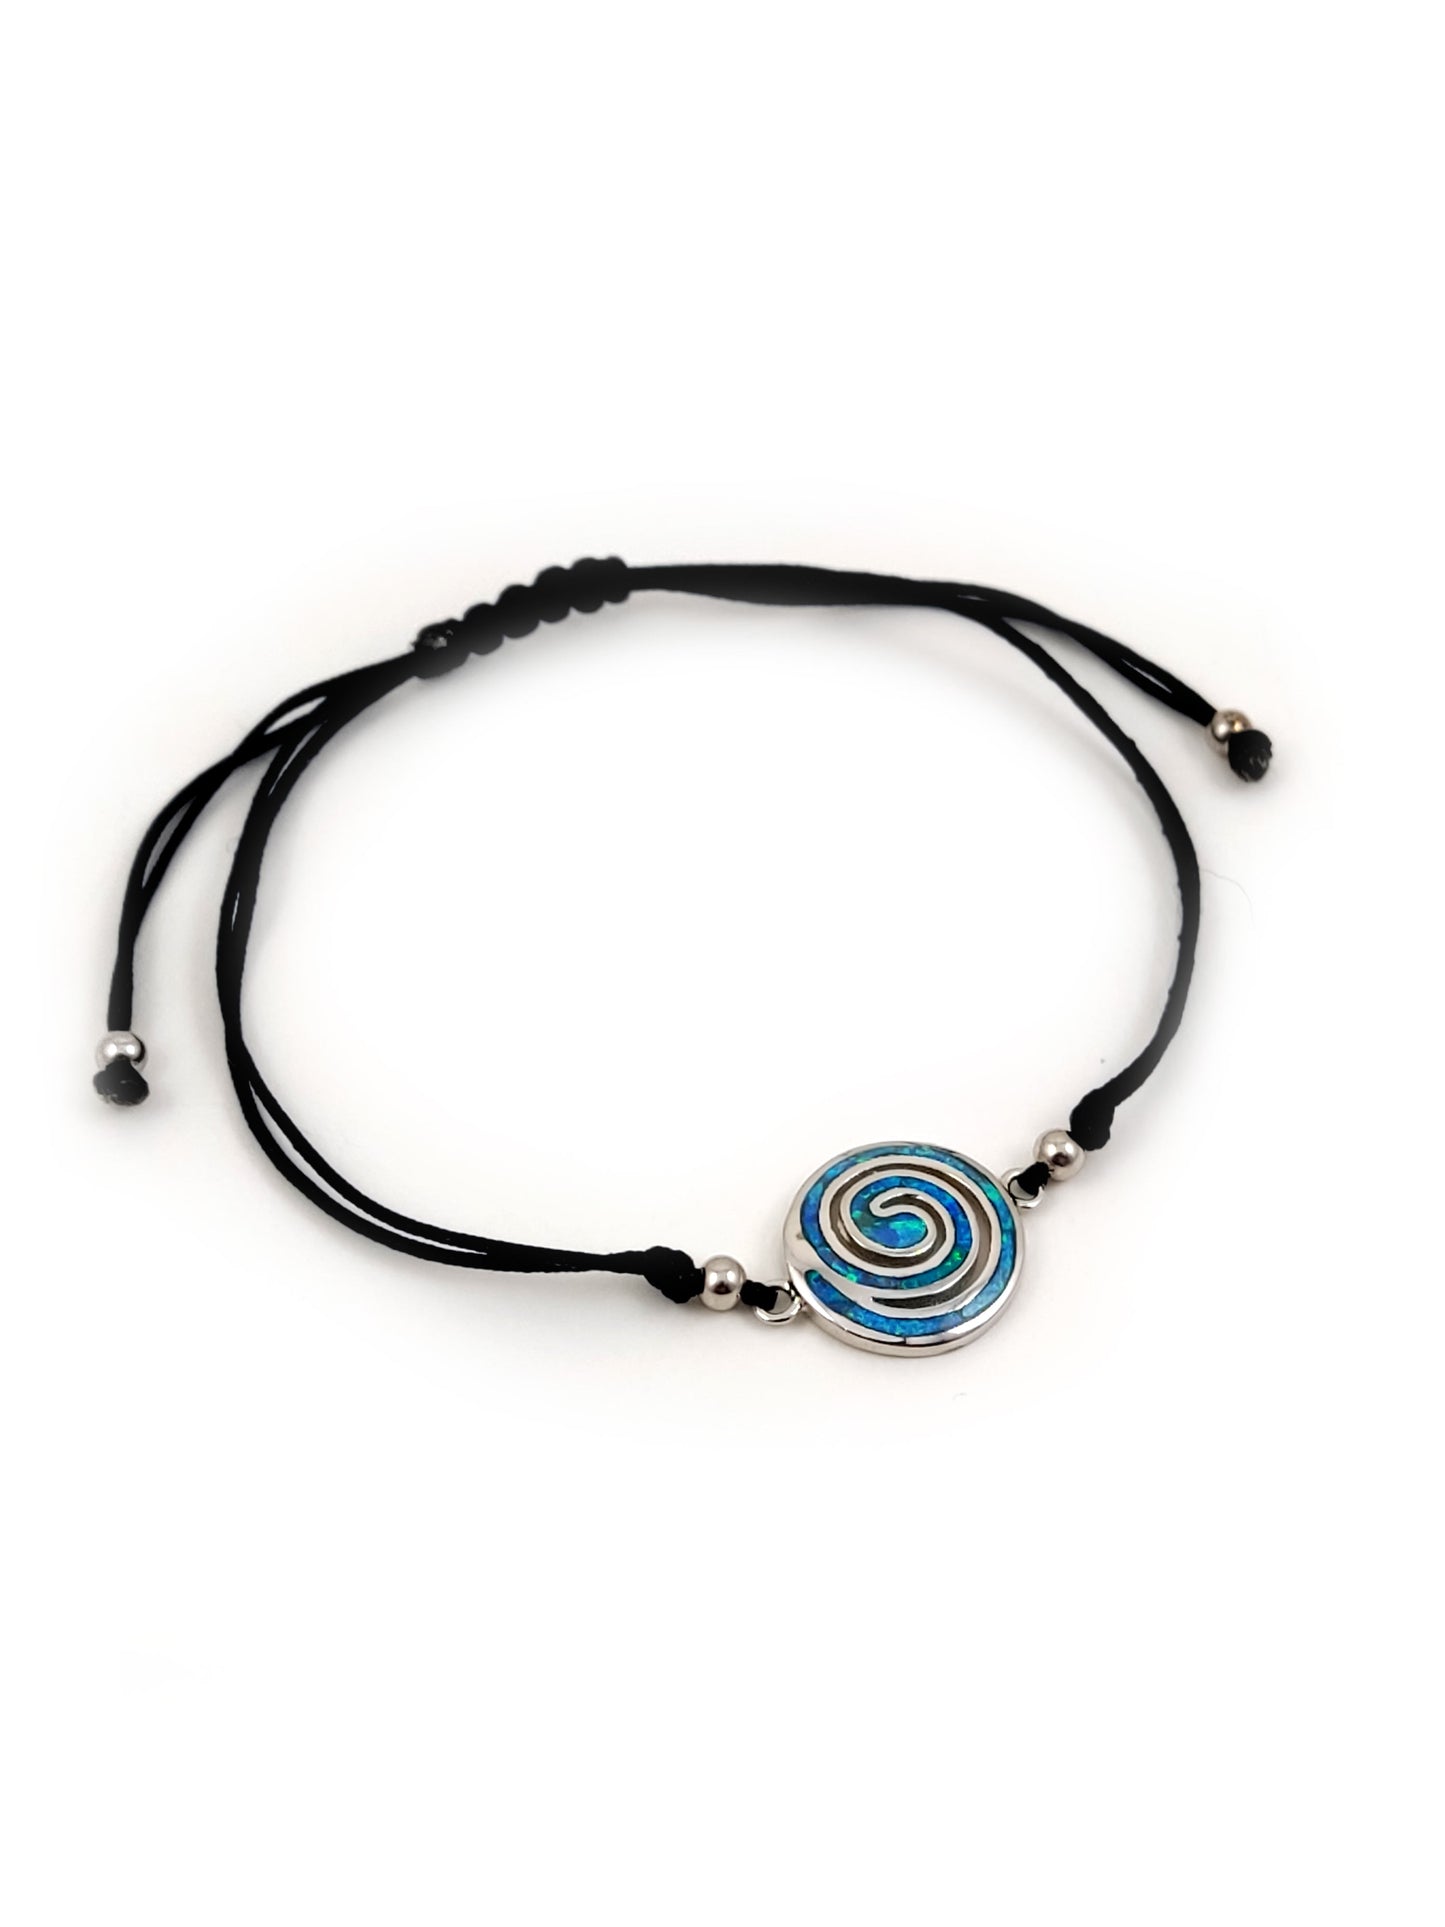 Greek Spiral Silver Blue Opal Cord Macrame Bracelet 14mm